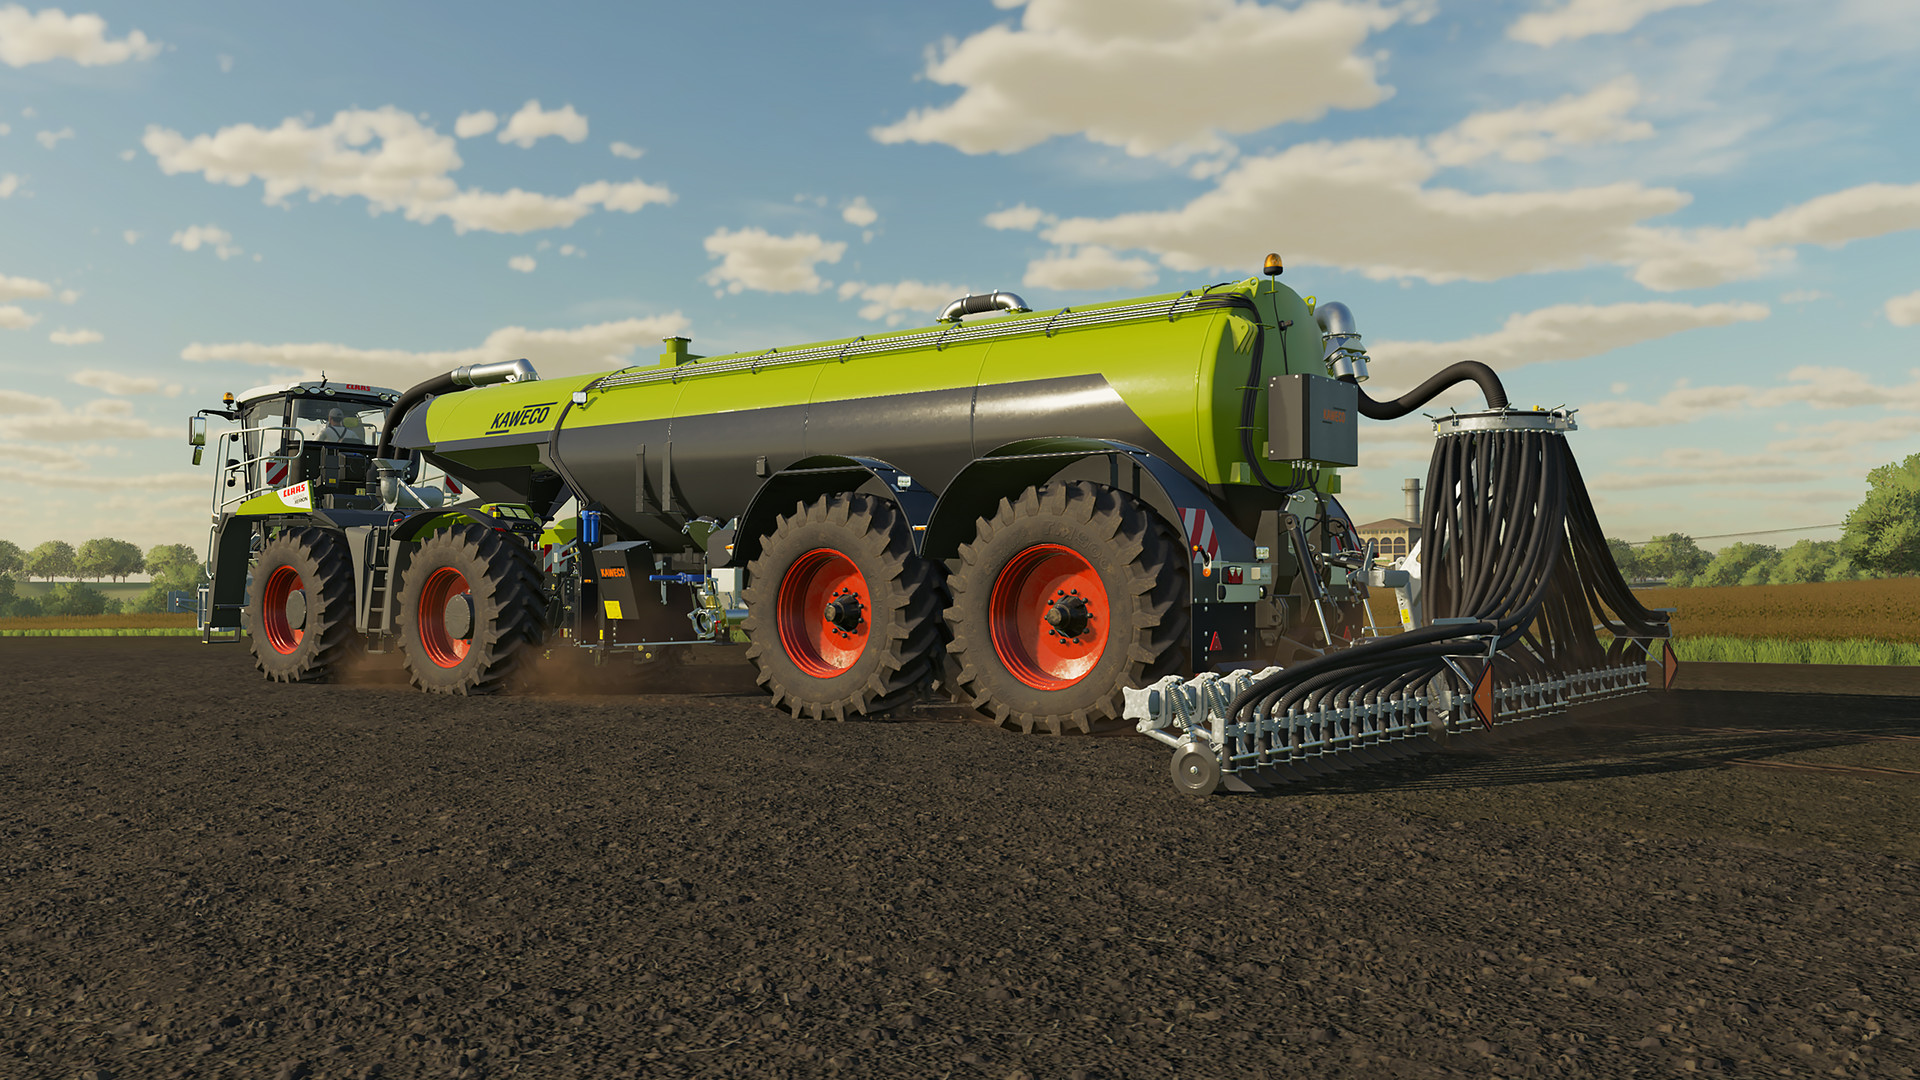 Farming Simulator 22: Premium Edition Giants Software CD Key